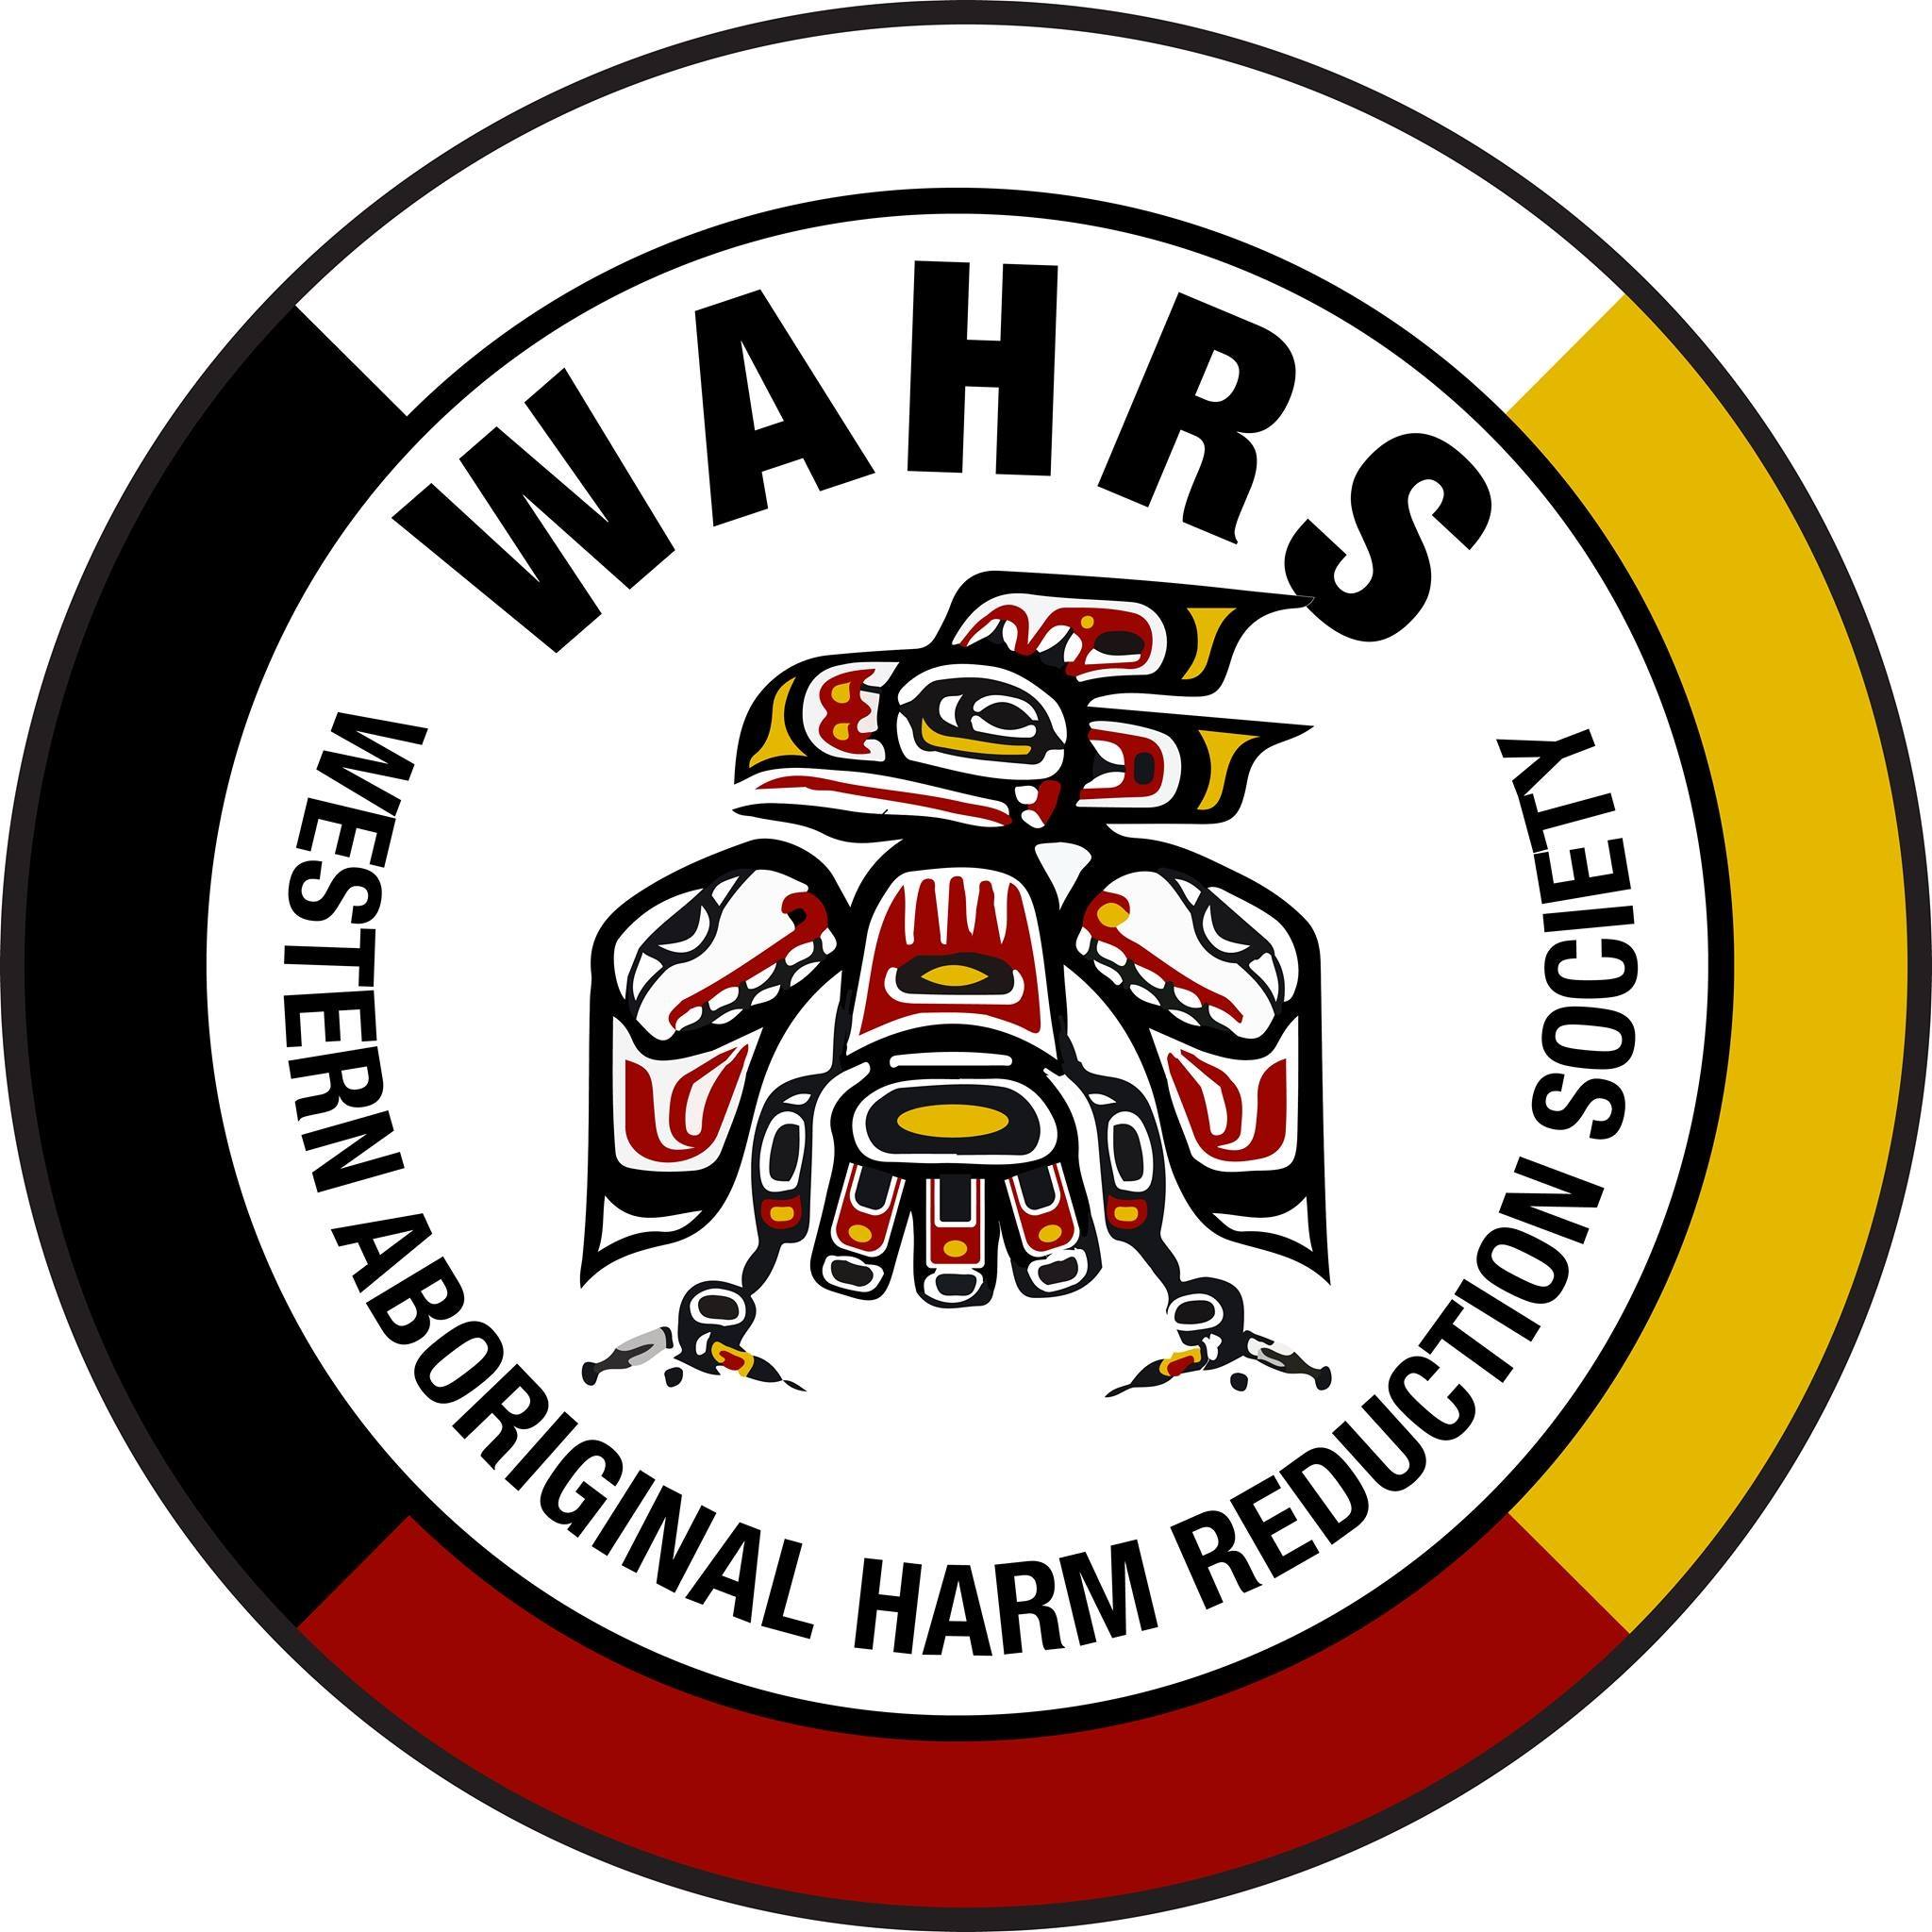 Western Aboriginal Harm Reduction Society (WAHRS)